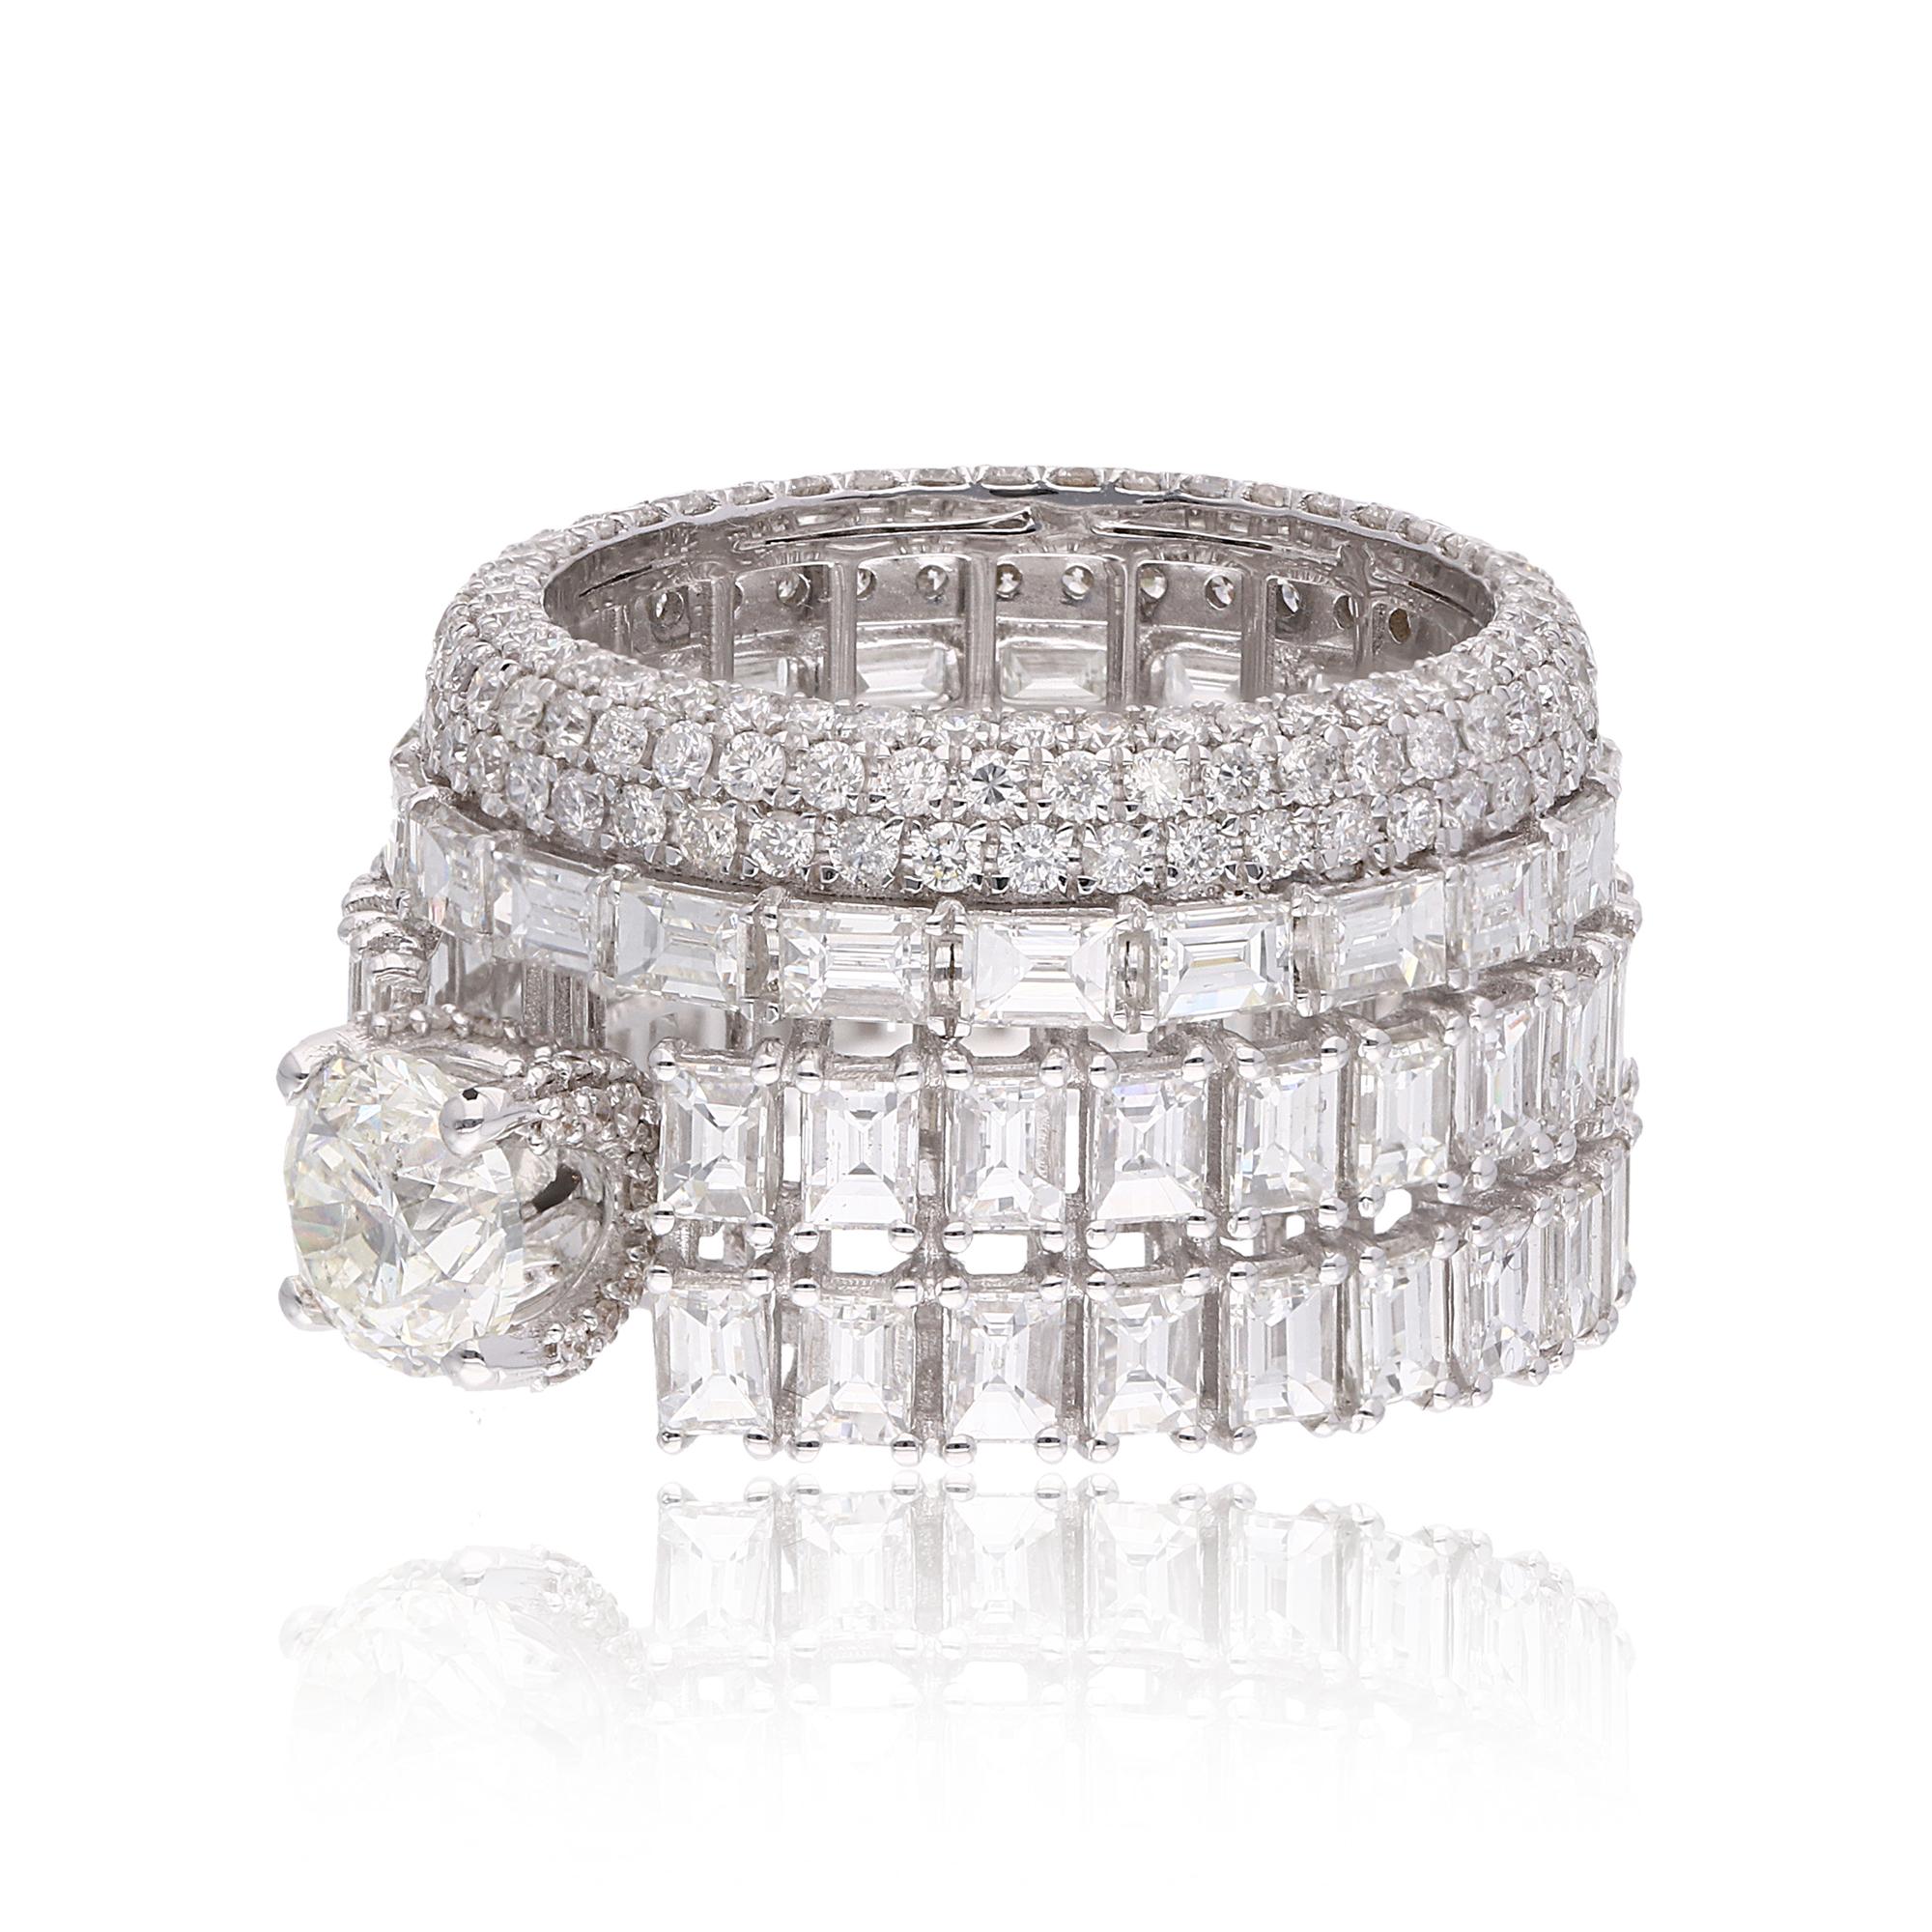 For Sale:  7.3 Carat SI Clarity HI Color Round Emerald Cut Diamond Ring 18 Karat White Gold 3